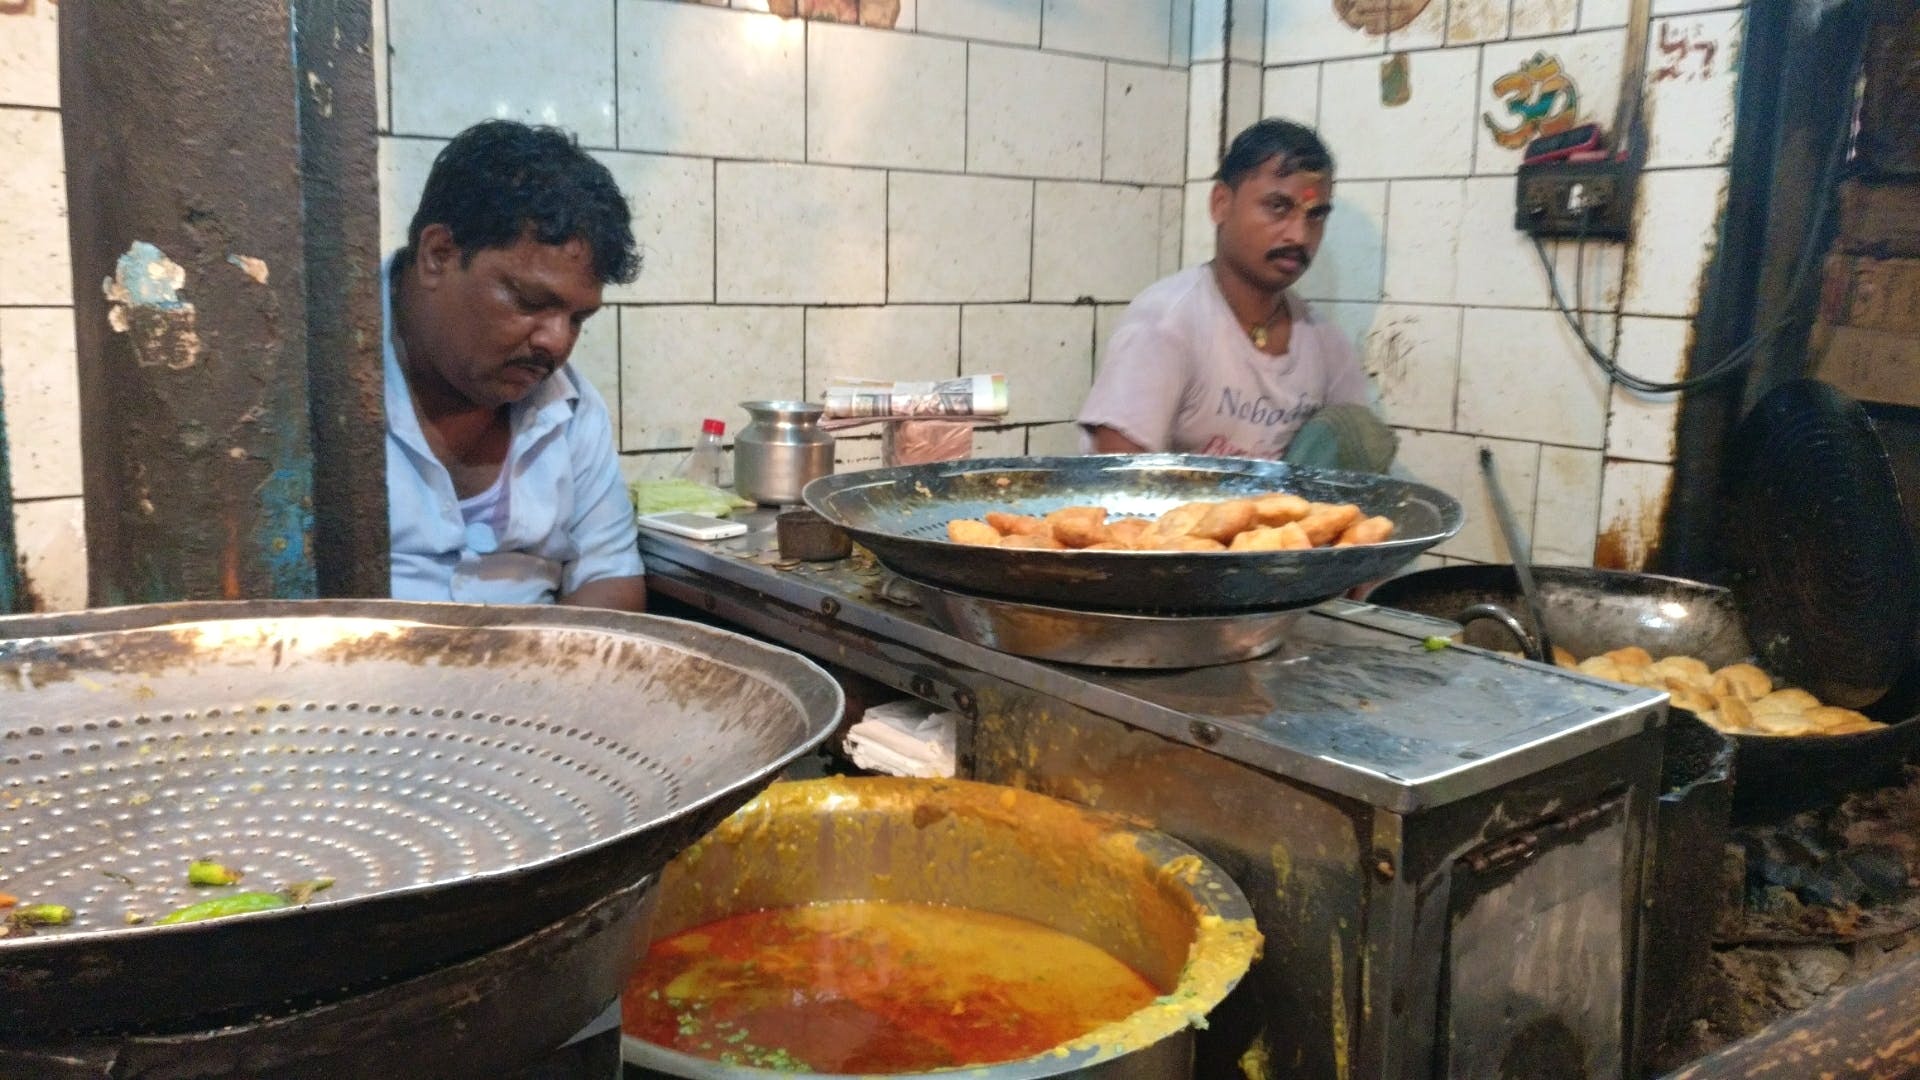 Food,Dish,Cuisine,Cooking,Karahi,Side dish,Street food